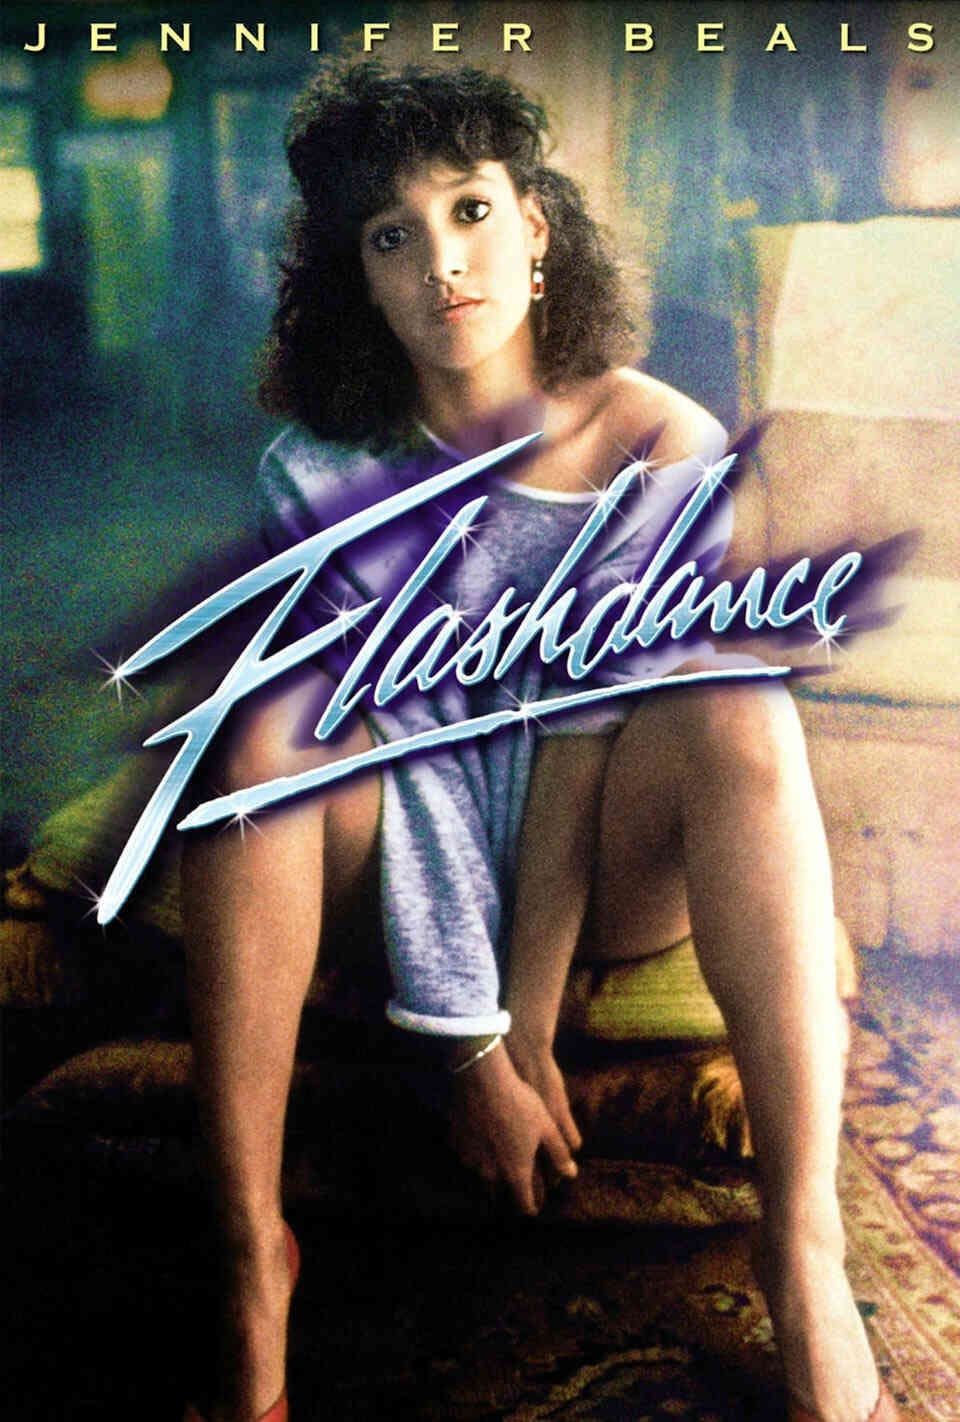 Read Flashdance screenplay (poster)